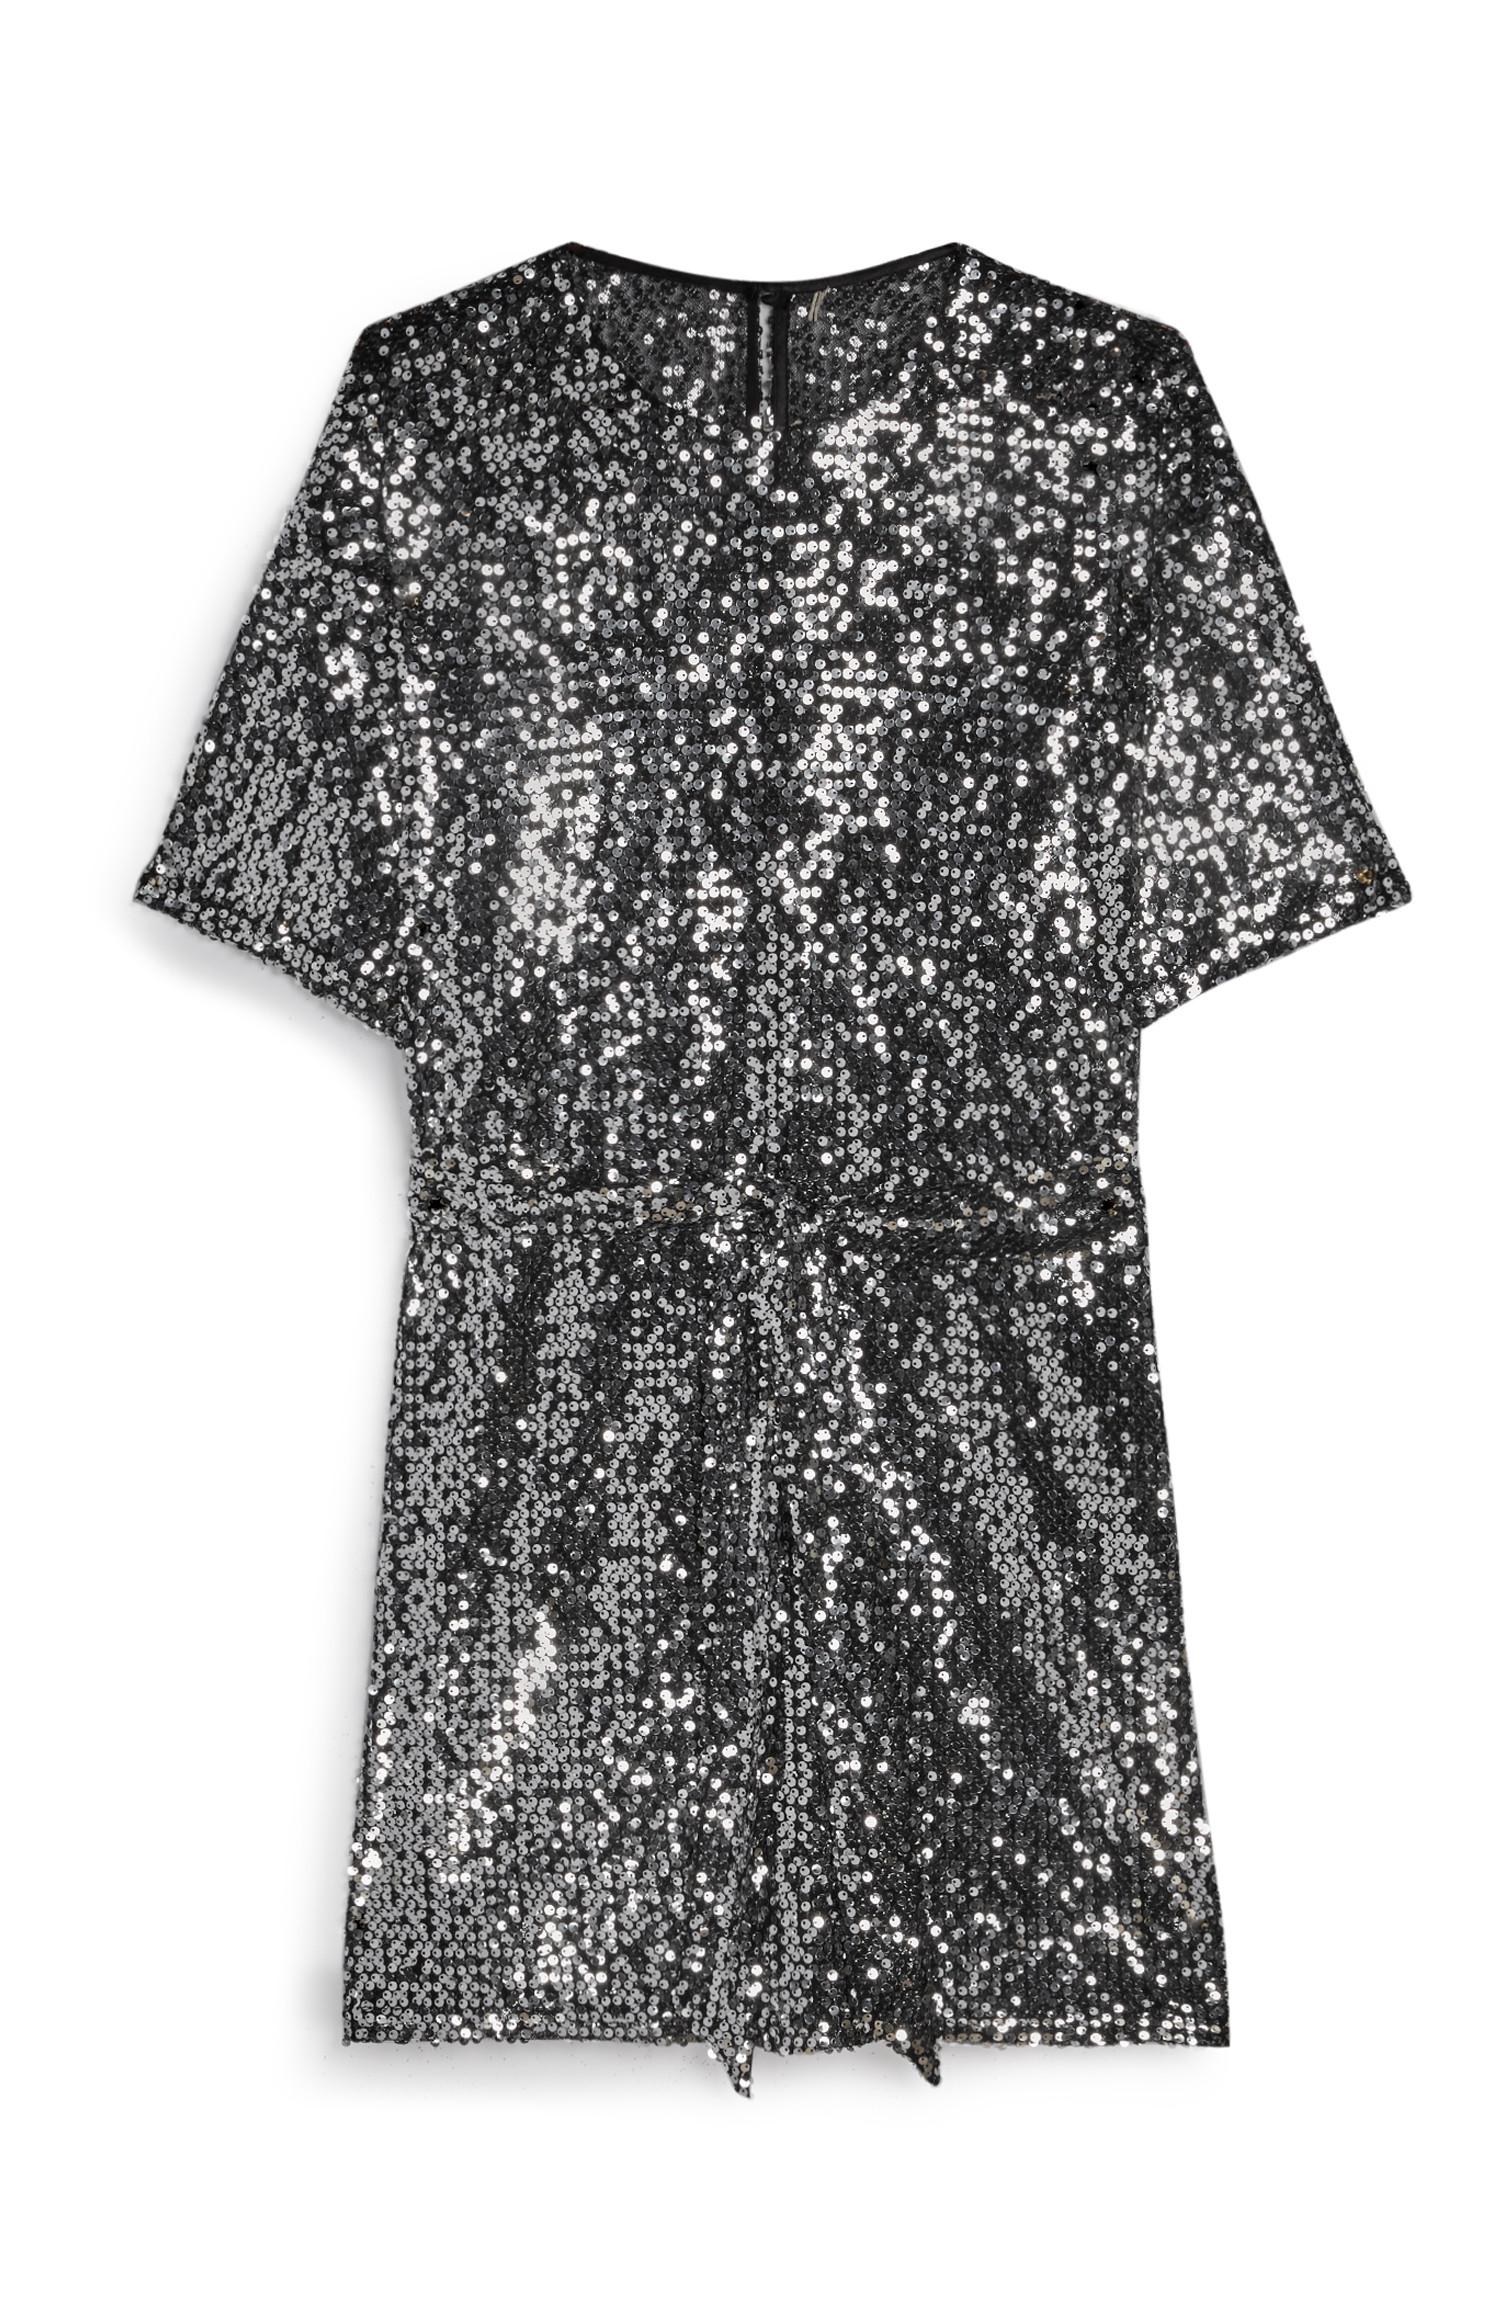 primark sparkly dress